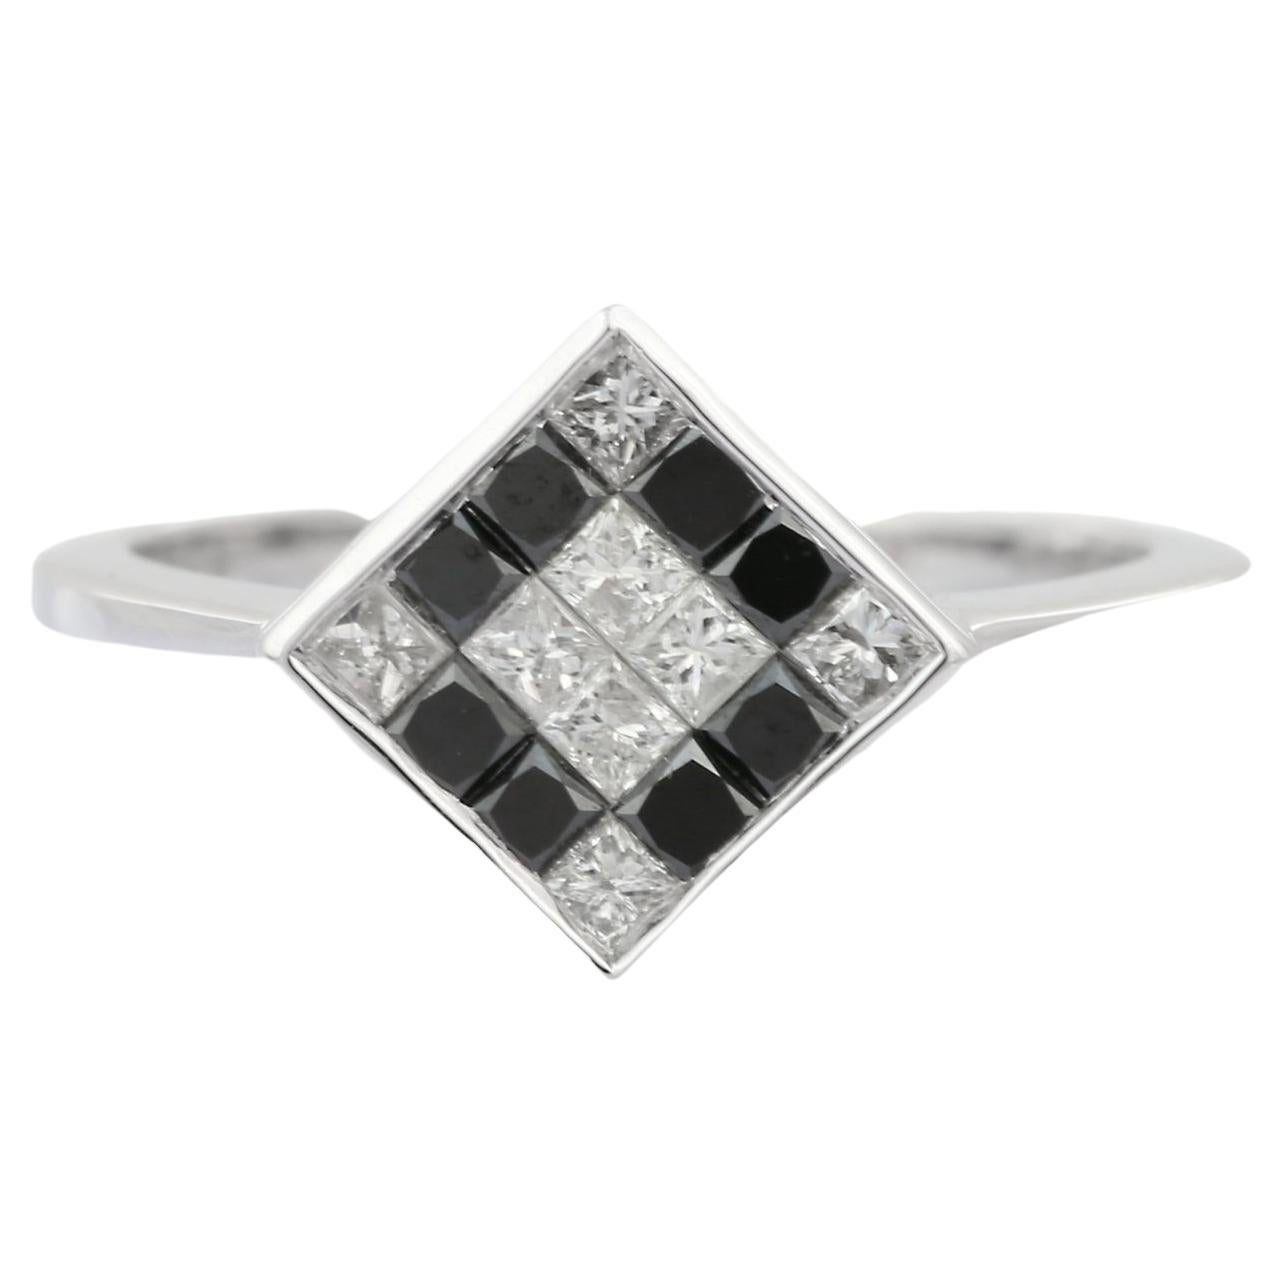 Art Deco Style Black and White Diamond Square Ring in 18 Karat White Gold